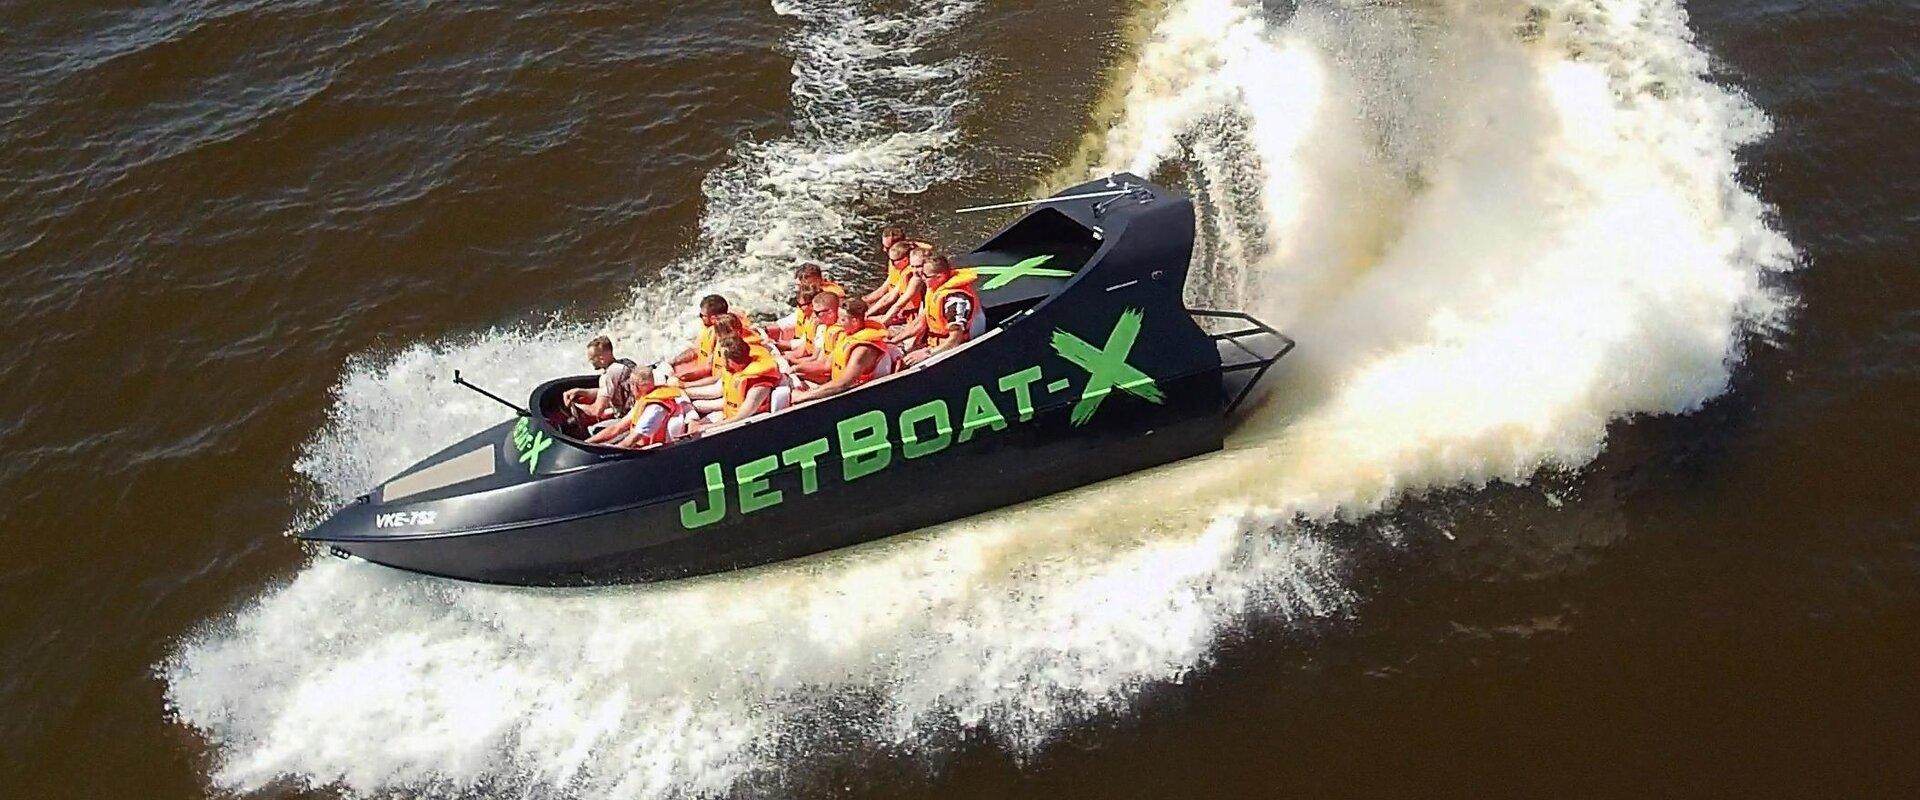 Jetboat-x rides